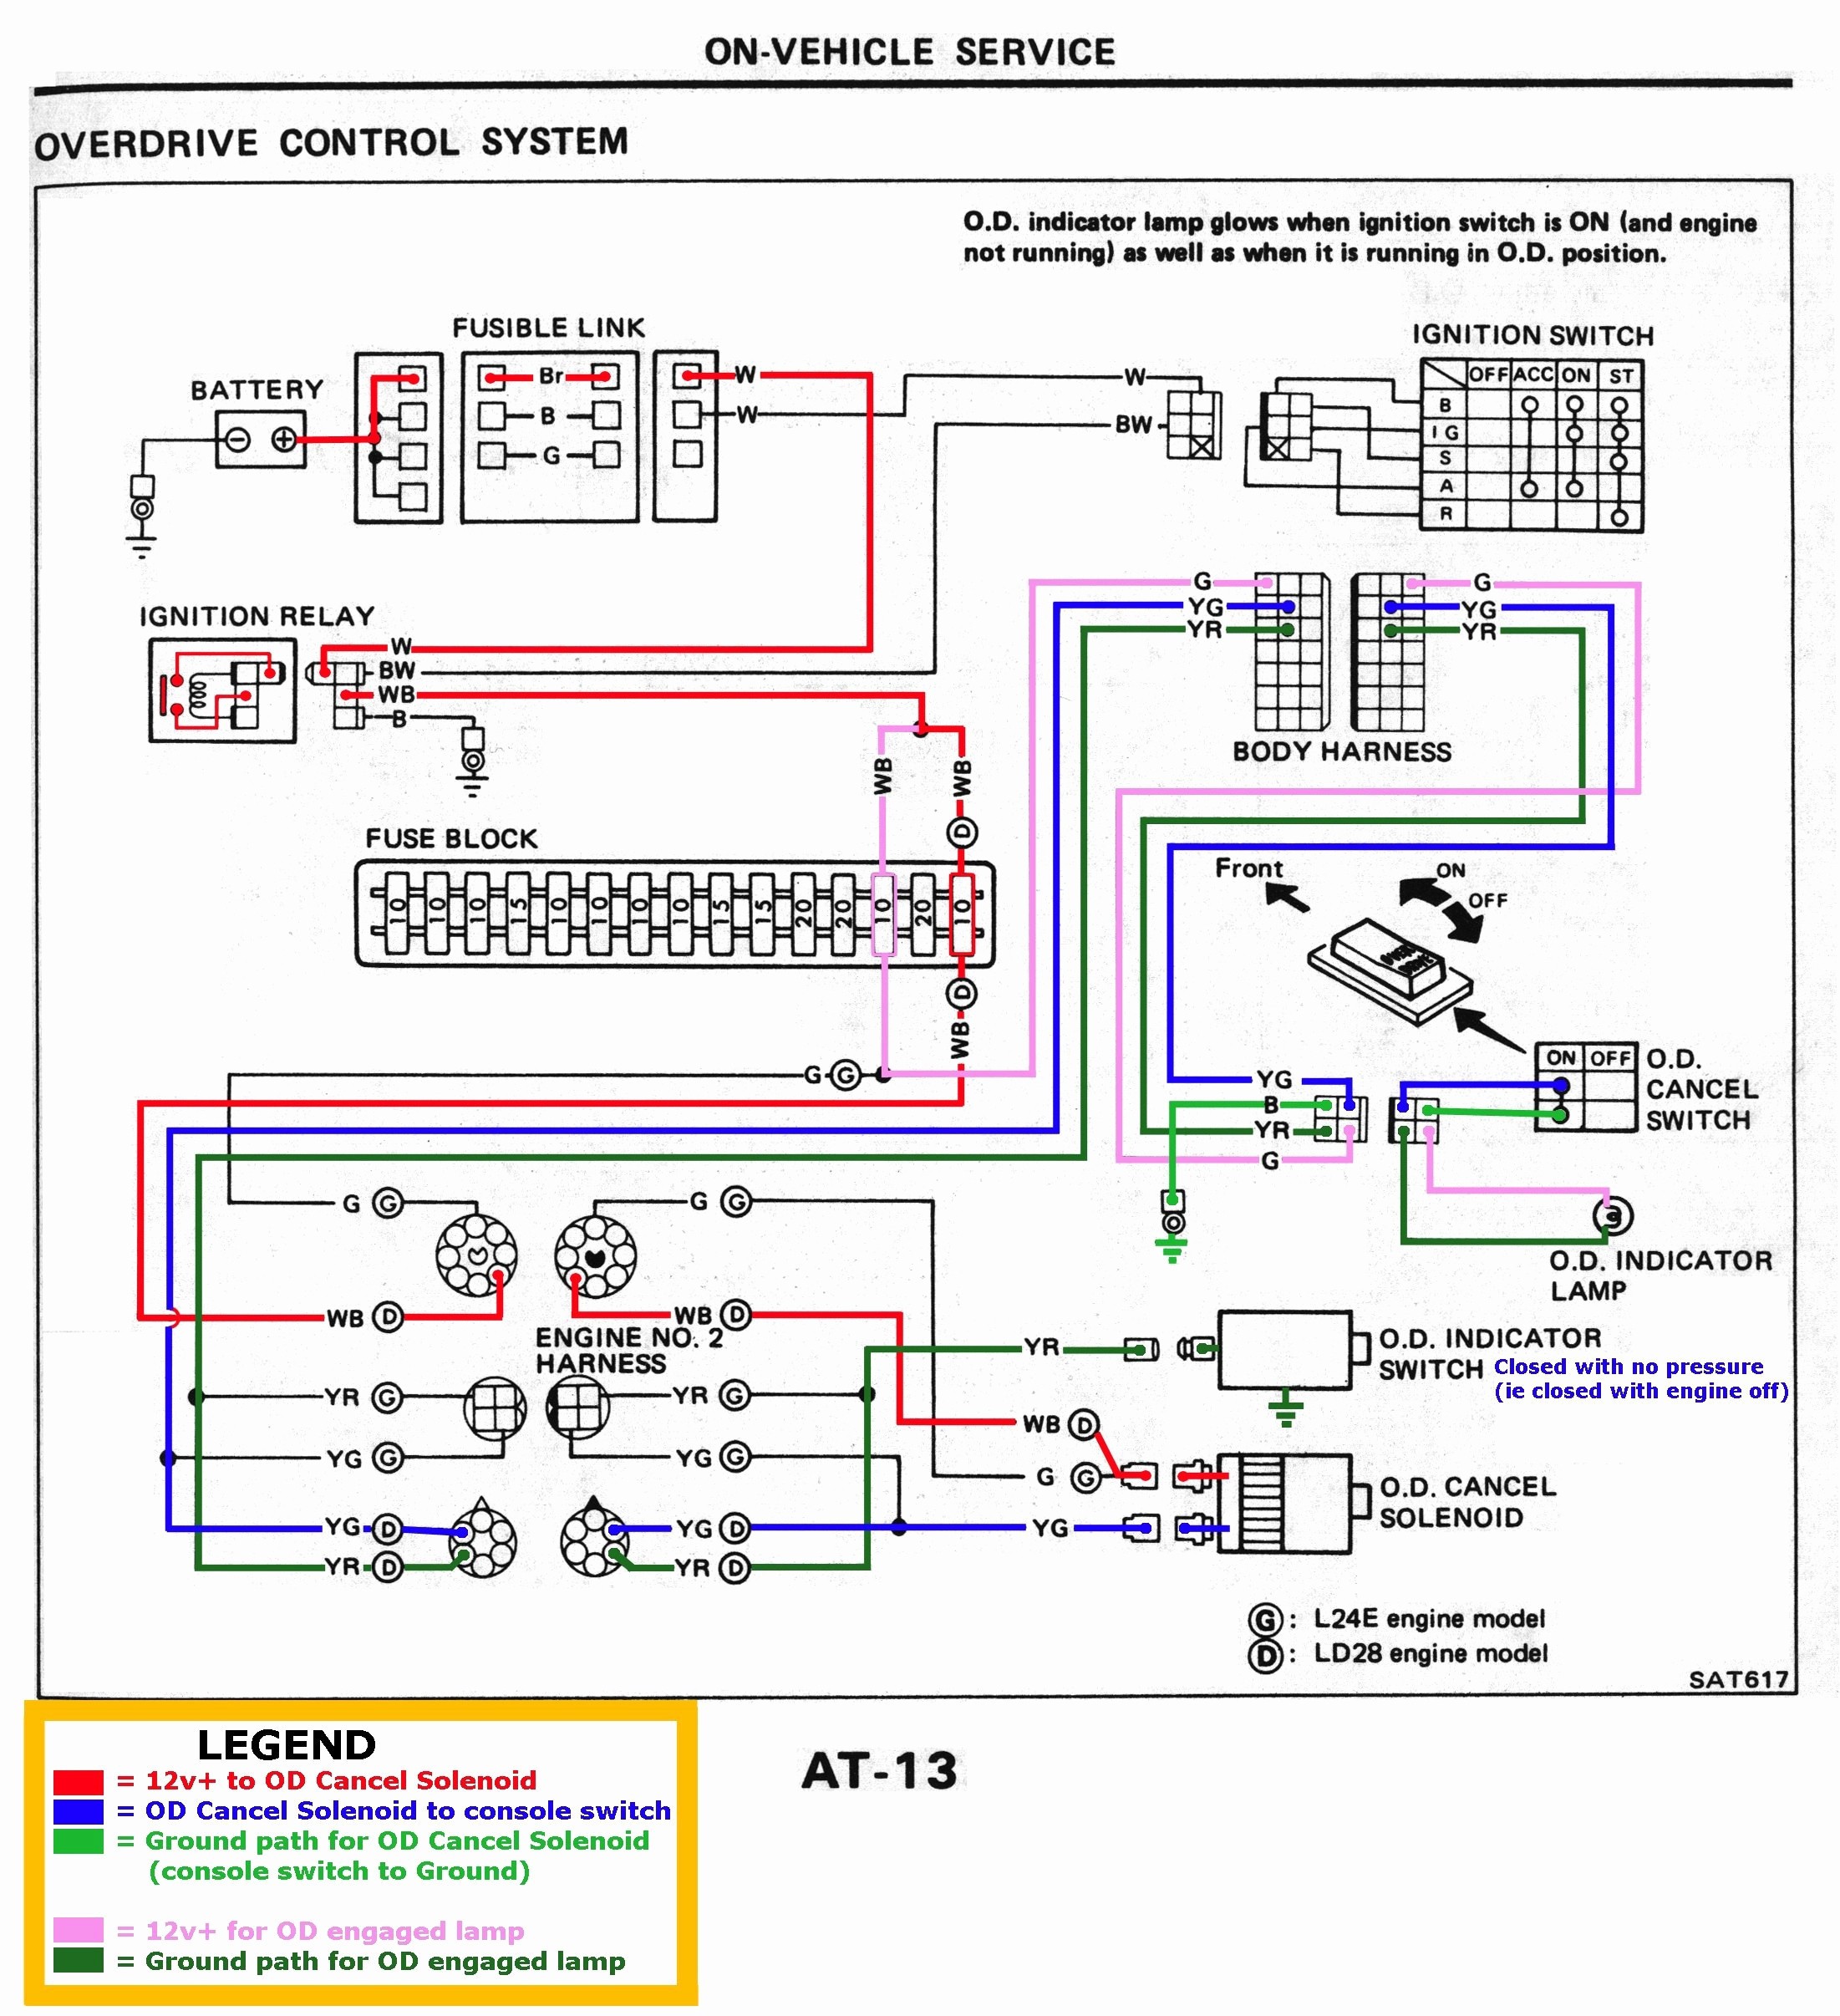 Square D Air pressor Pressure Switch Wiring Diagram New Wiring Diagram Square D Pressure Switch Wiring